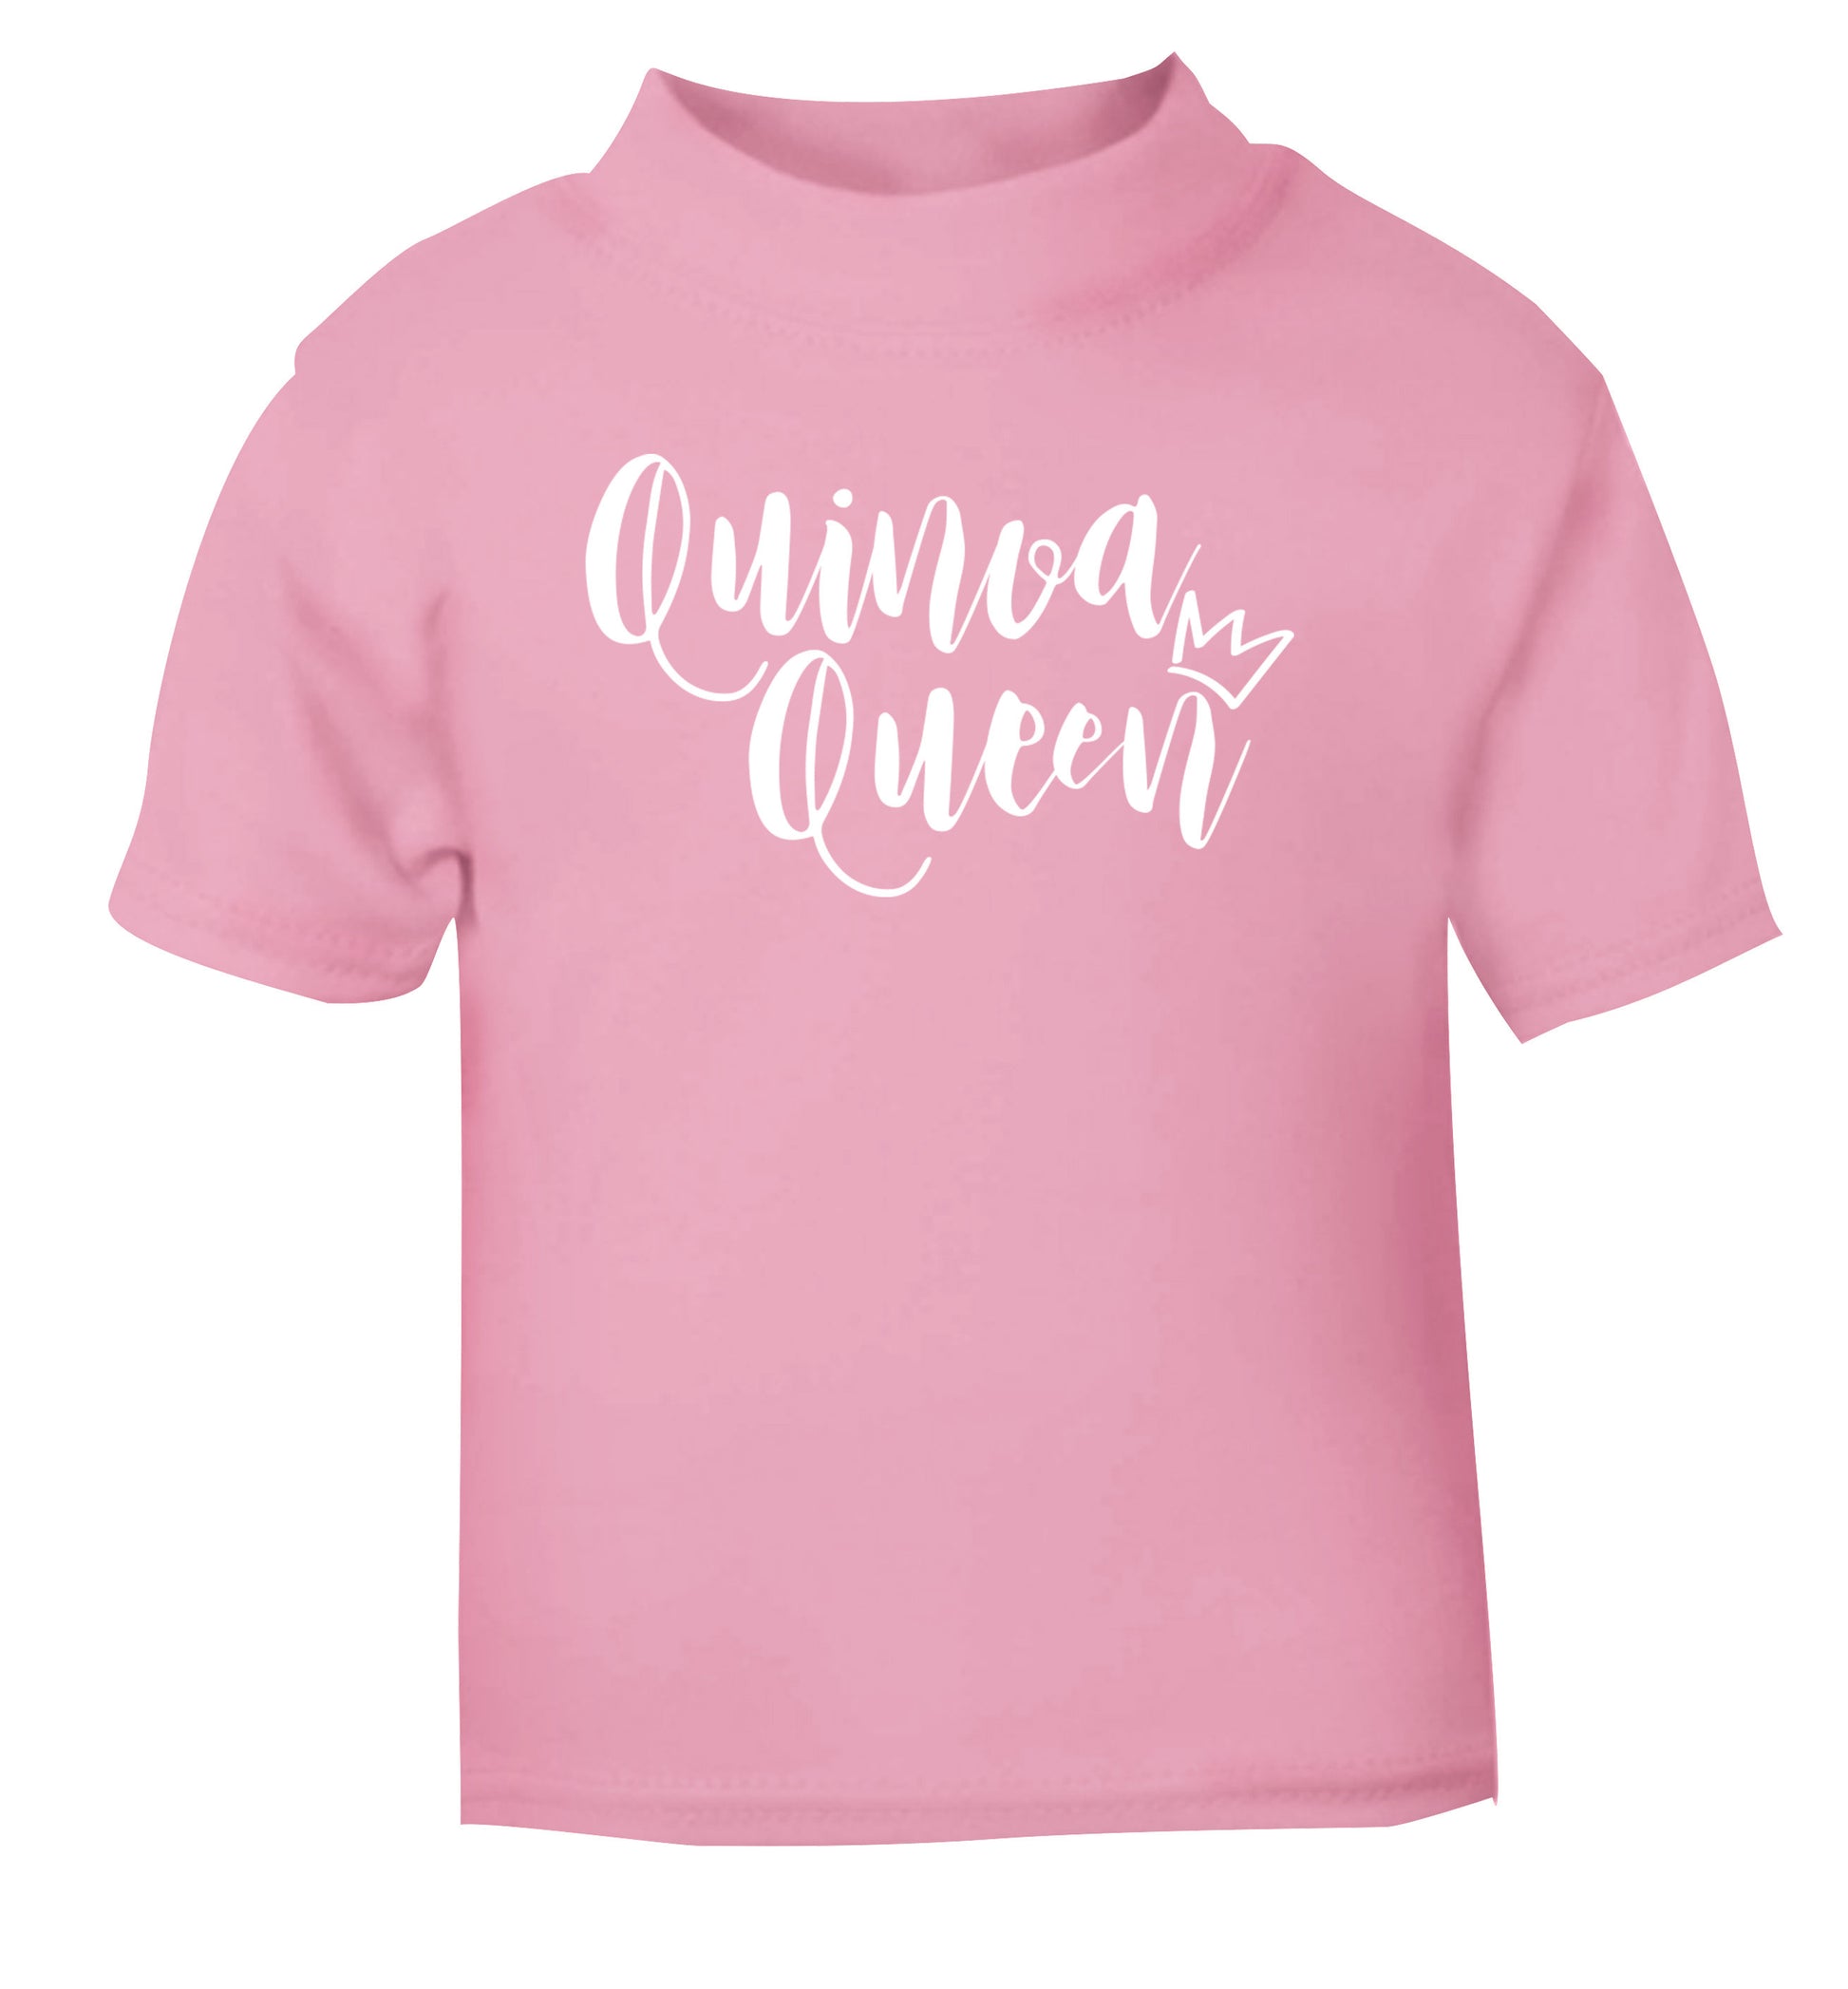 Quinoa Queen light pink Baby Toddler Tshirt 2 Years